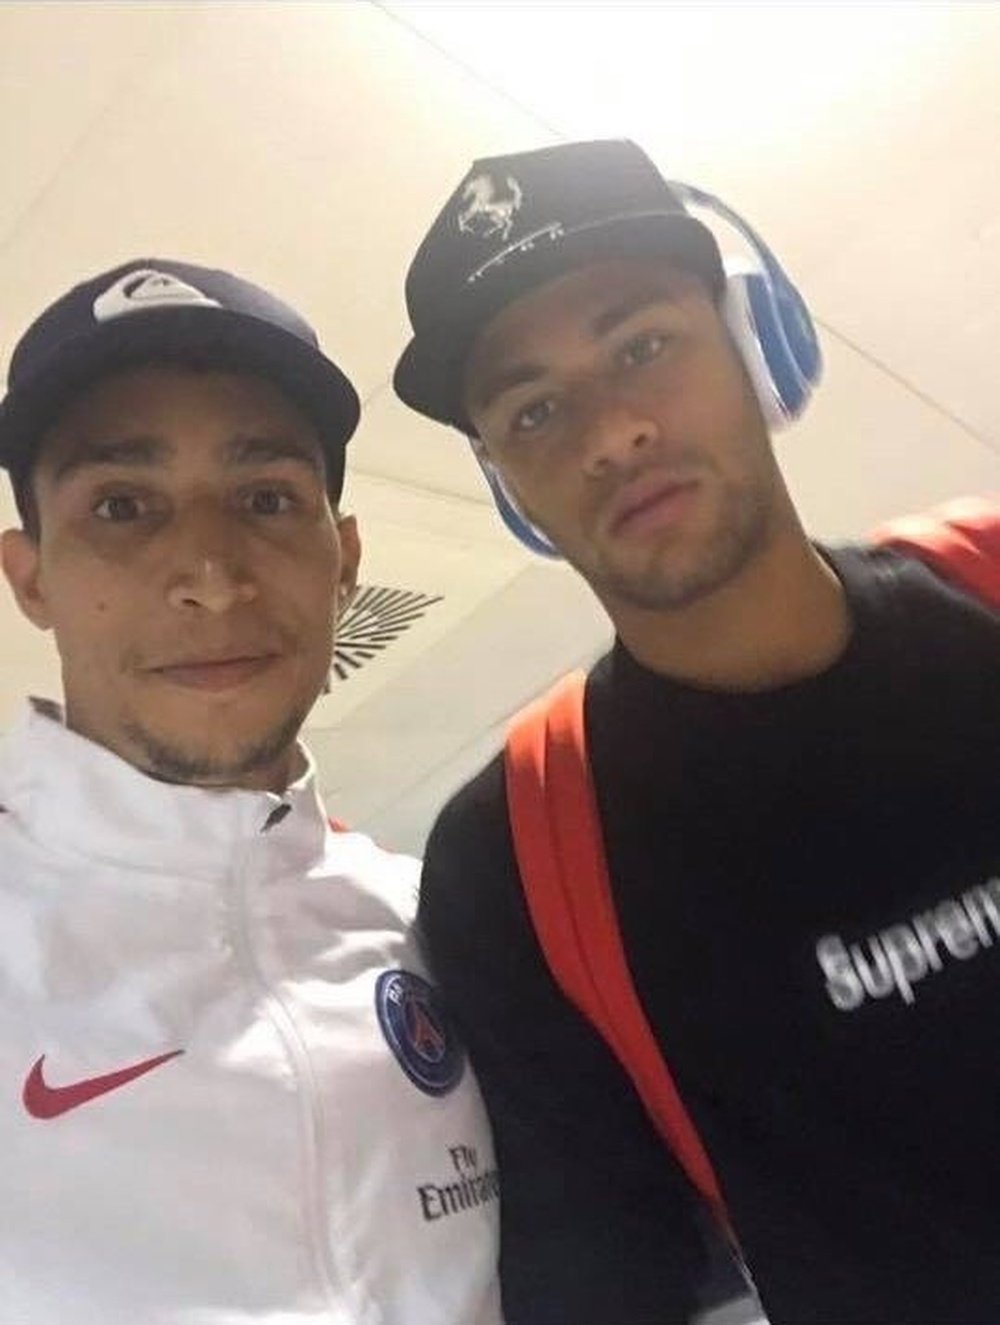 Neymar à son arrivée à Barcelone aujourd'hui. Twitter